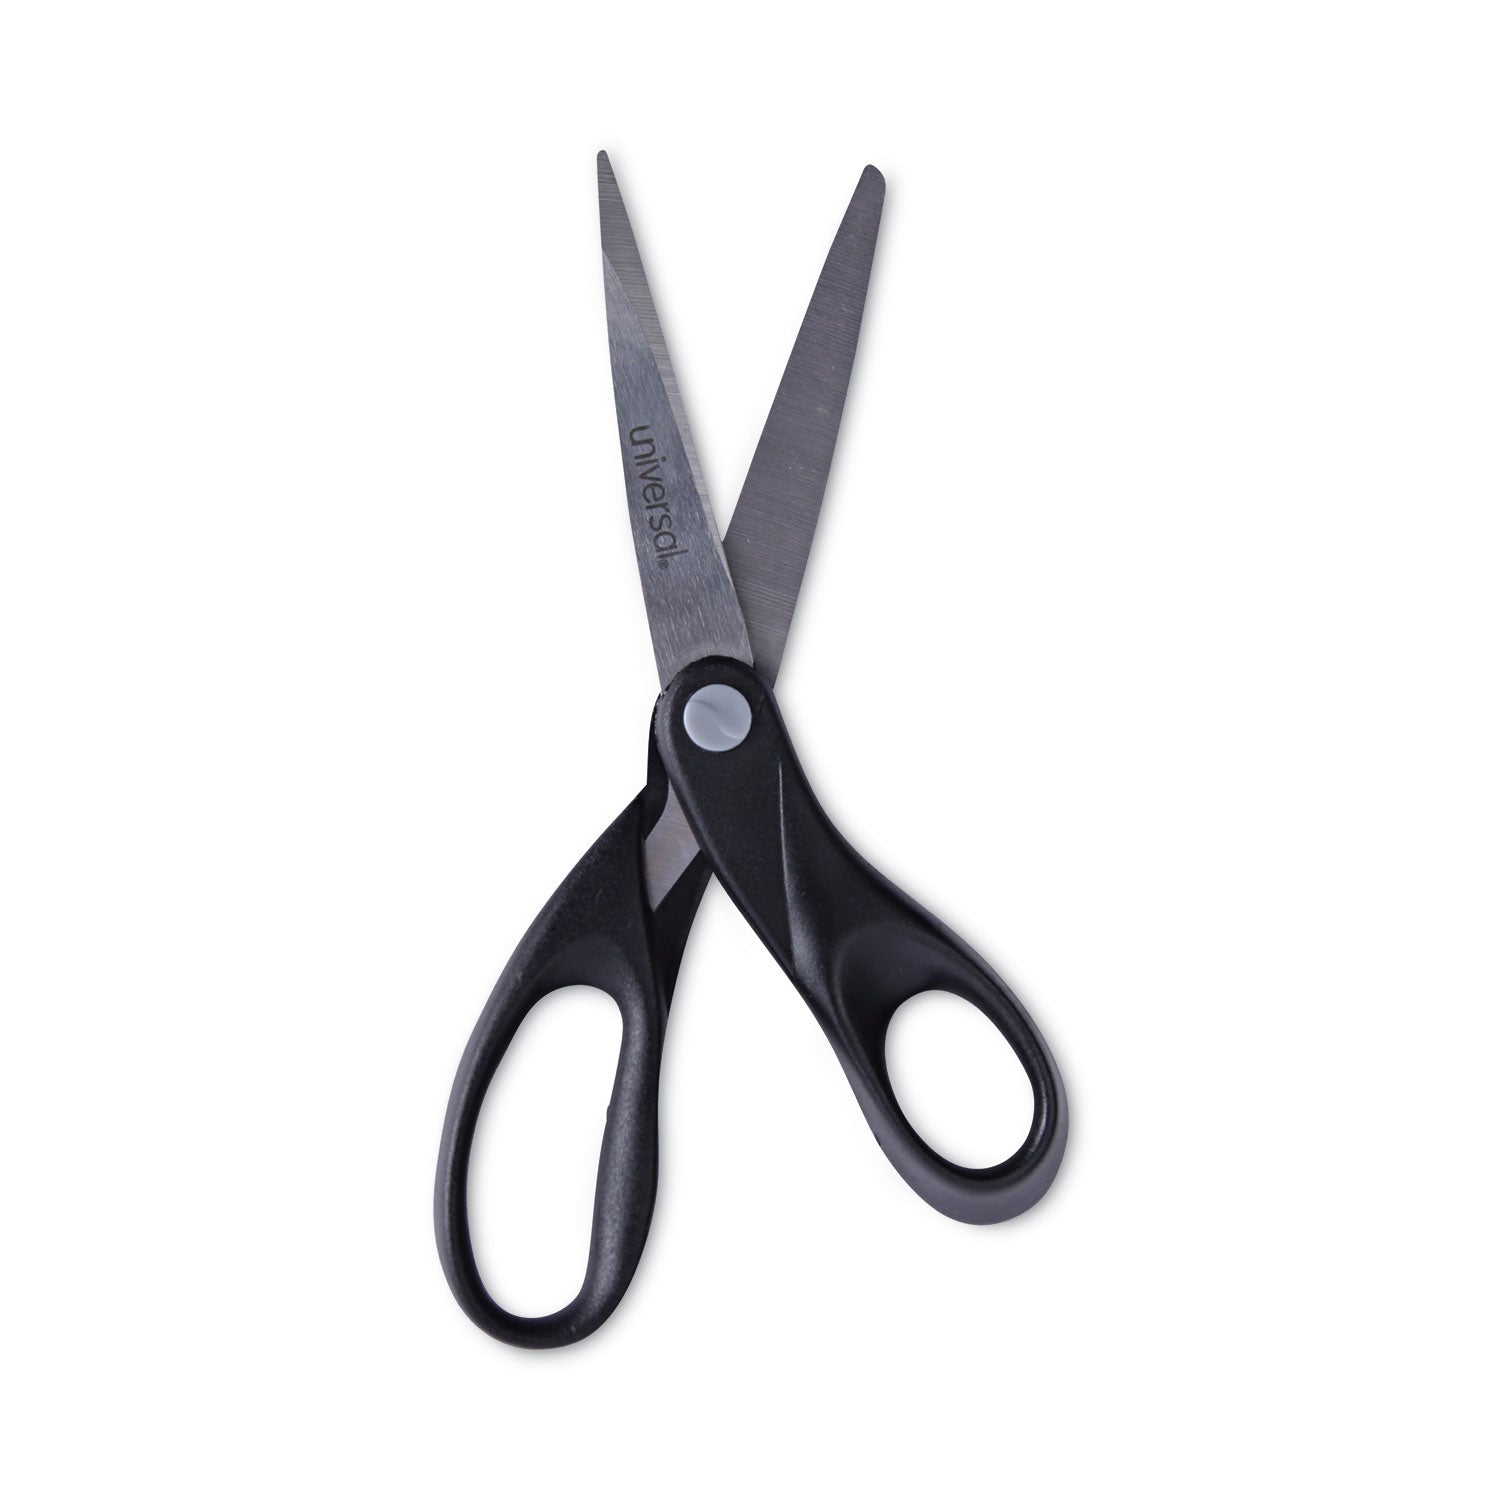 Stainless Steel Office Scissors, 8" Long, 3.75" Cut Length, Black Straight Handle - 